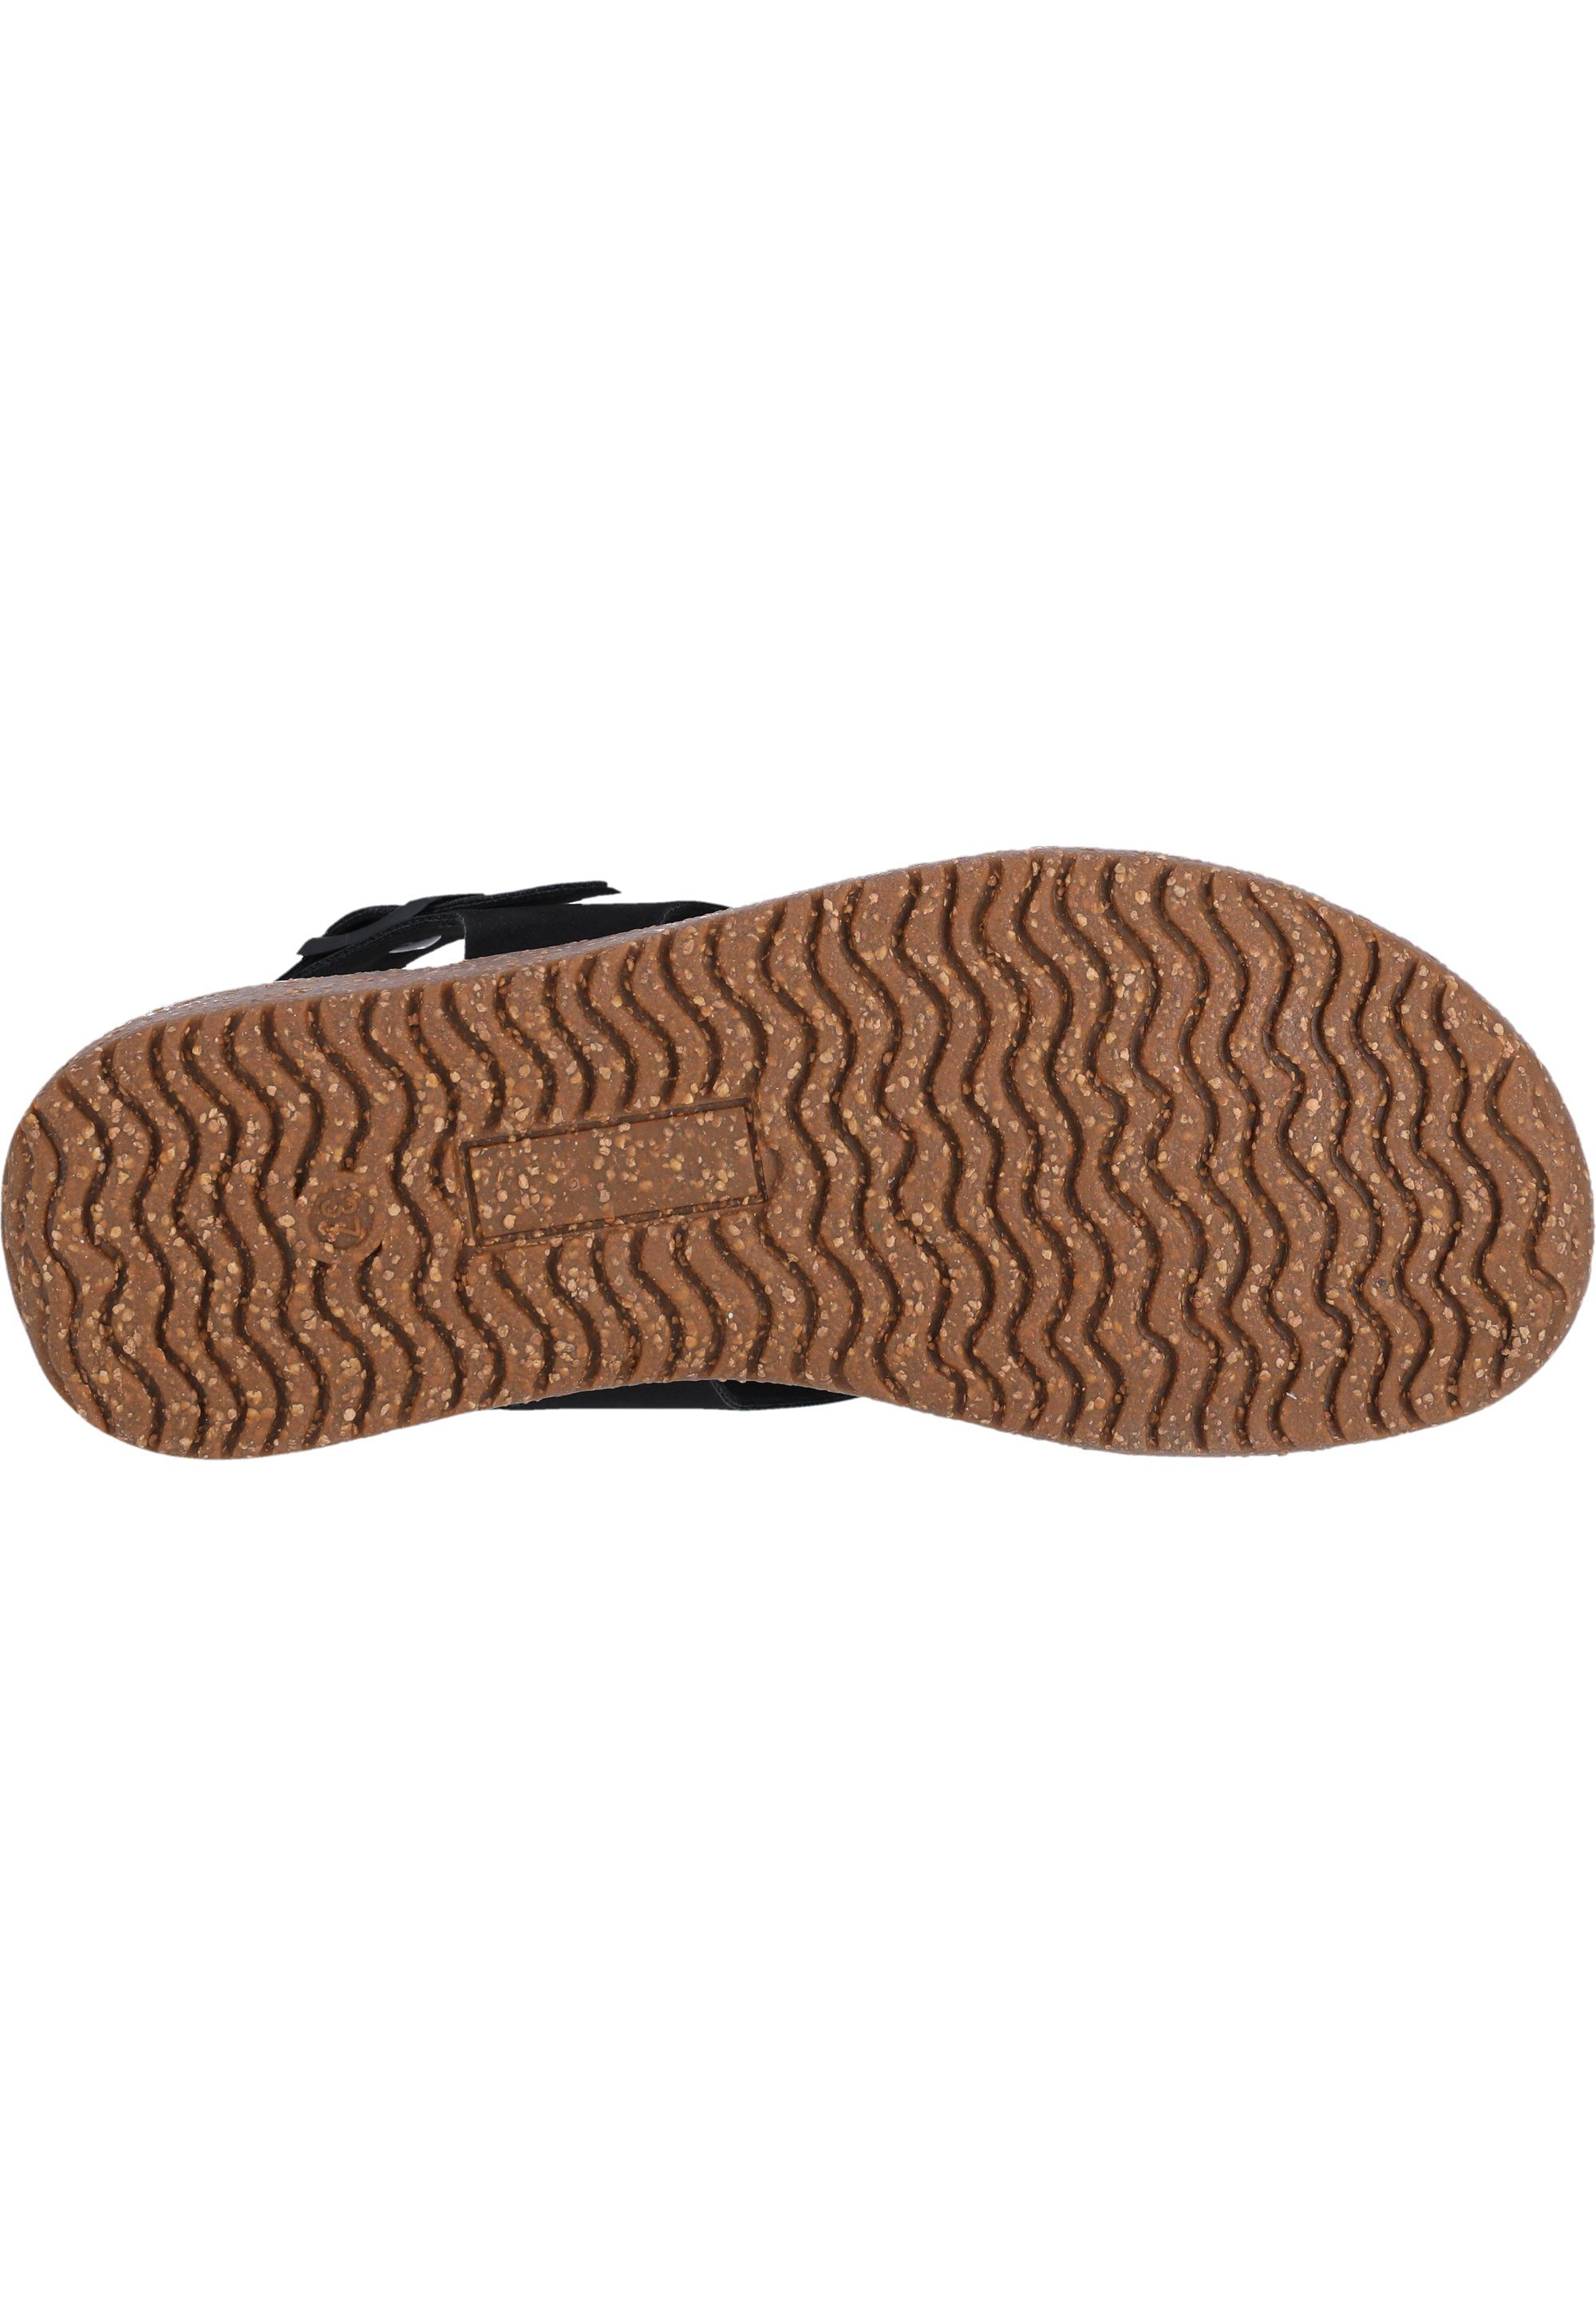 CRUZ extra Fußbett mit Bellevira komfortablem Sandale